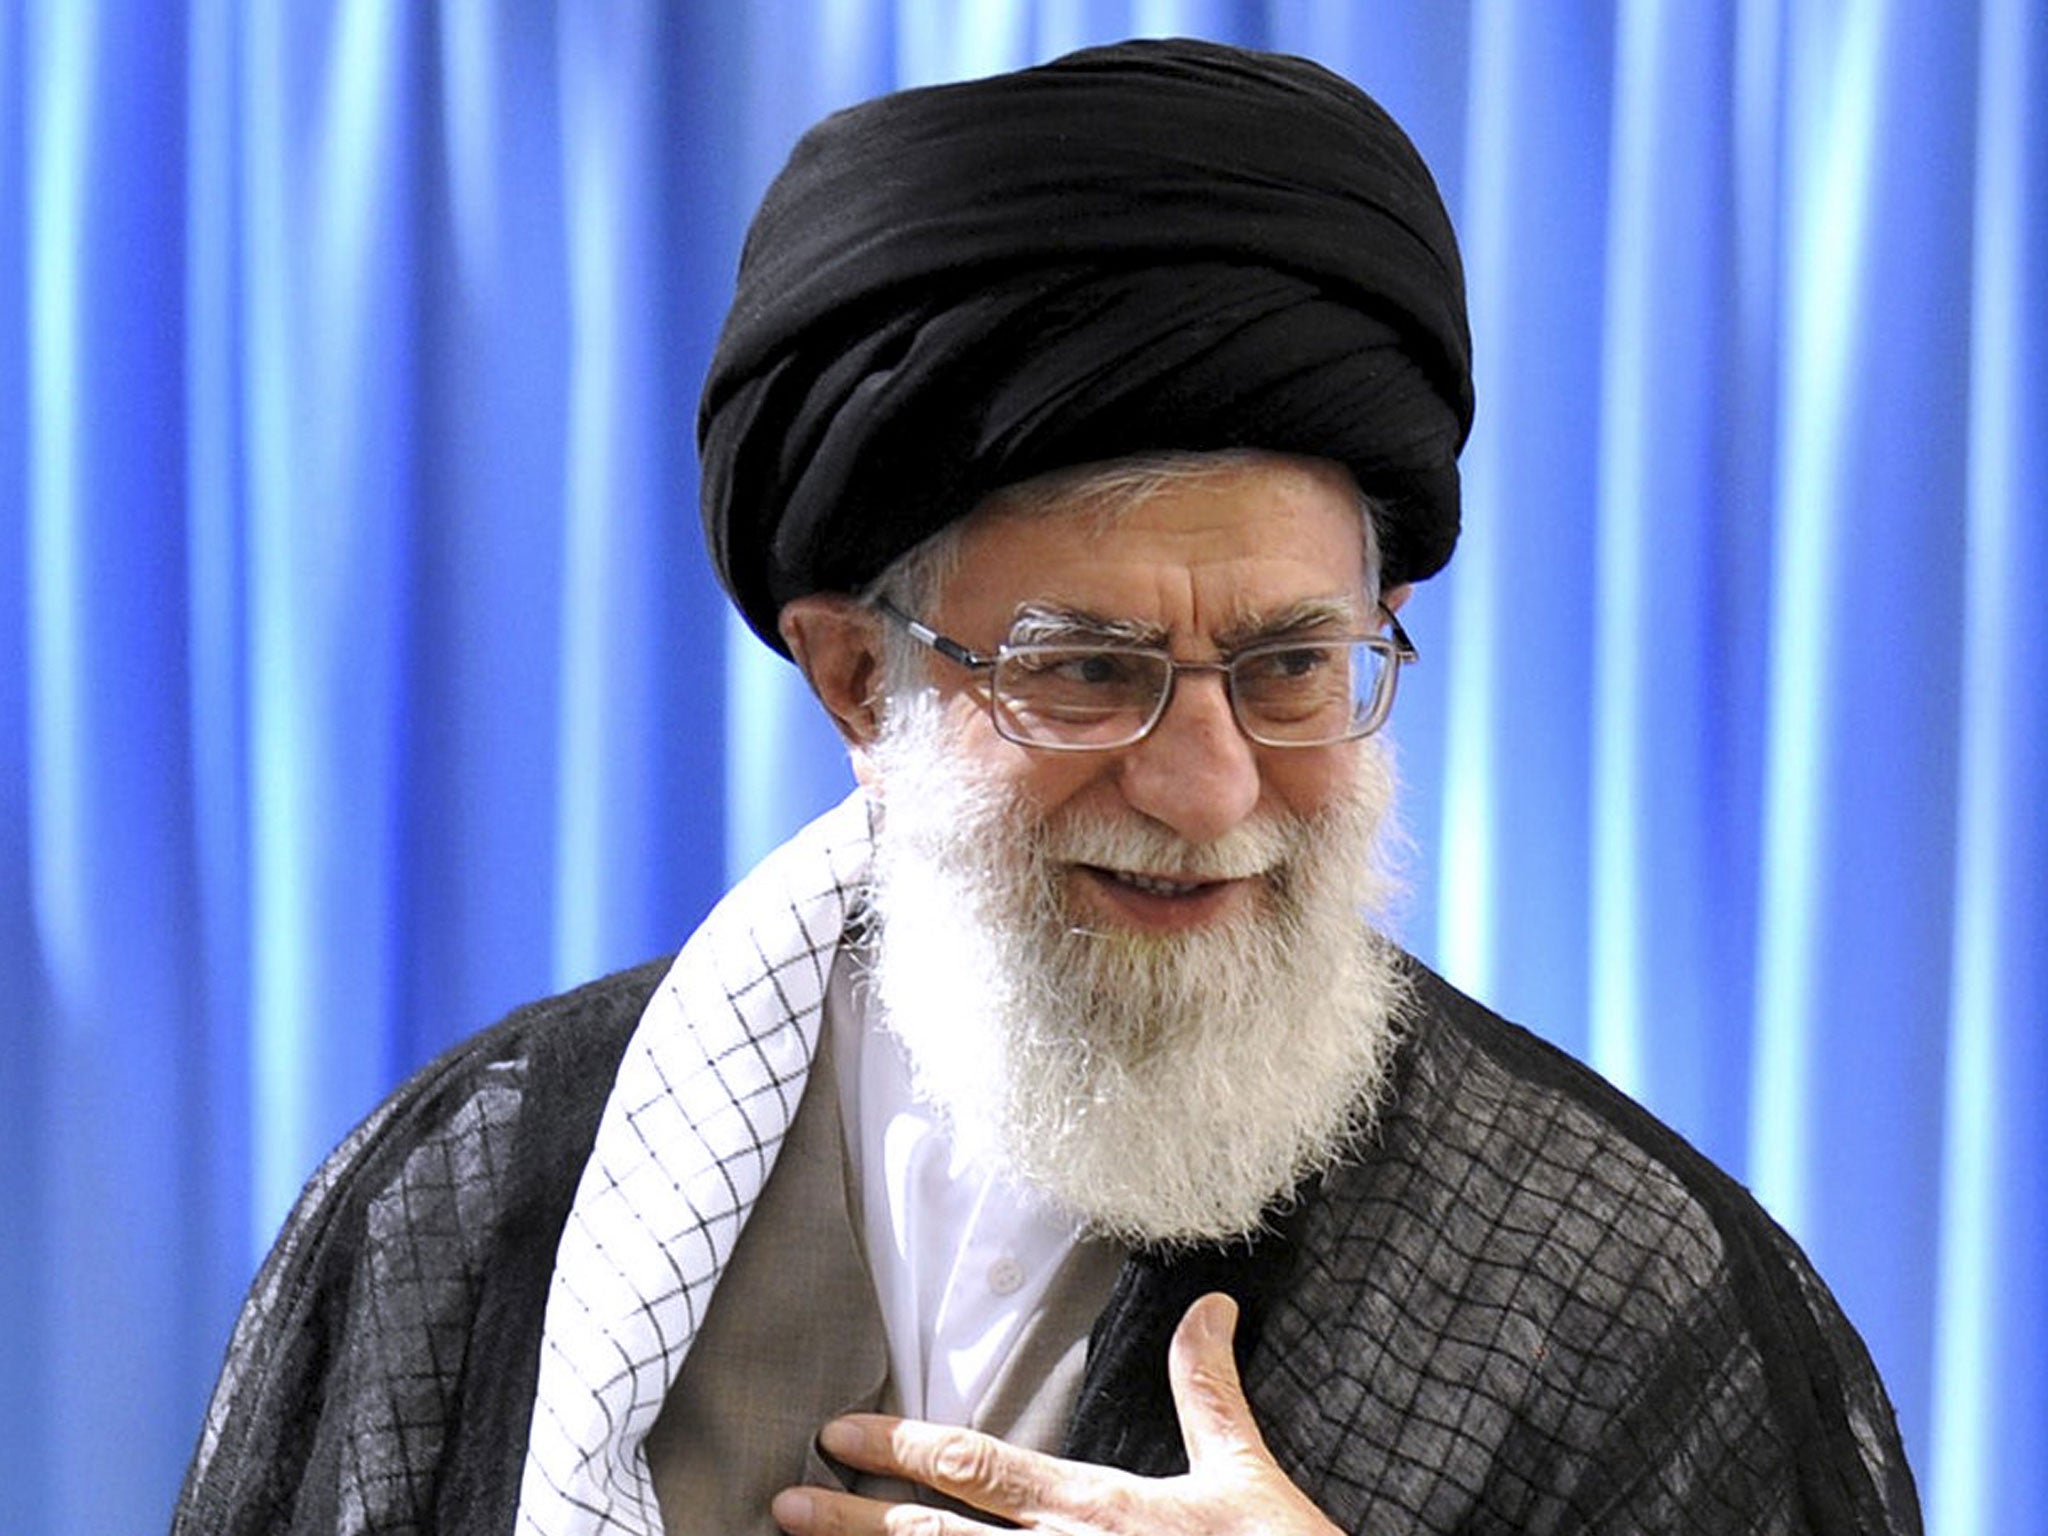 ayatollah seyyed ali khamenei muhammad the movie